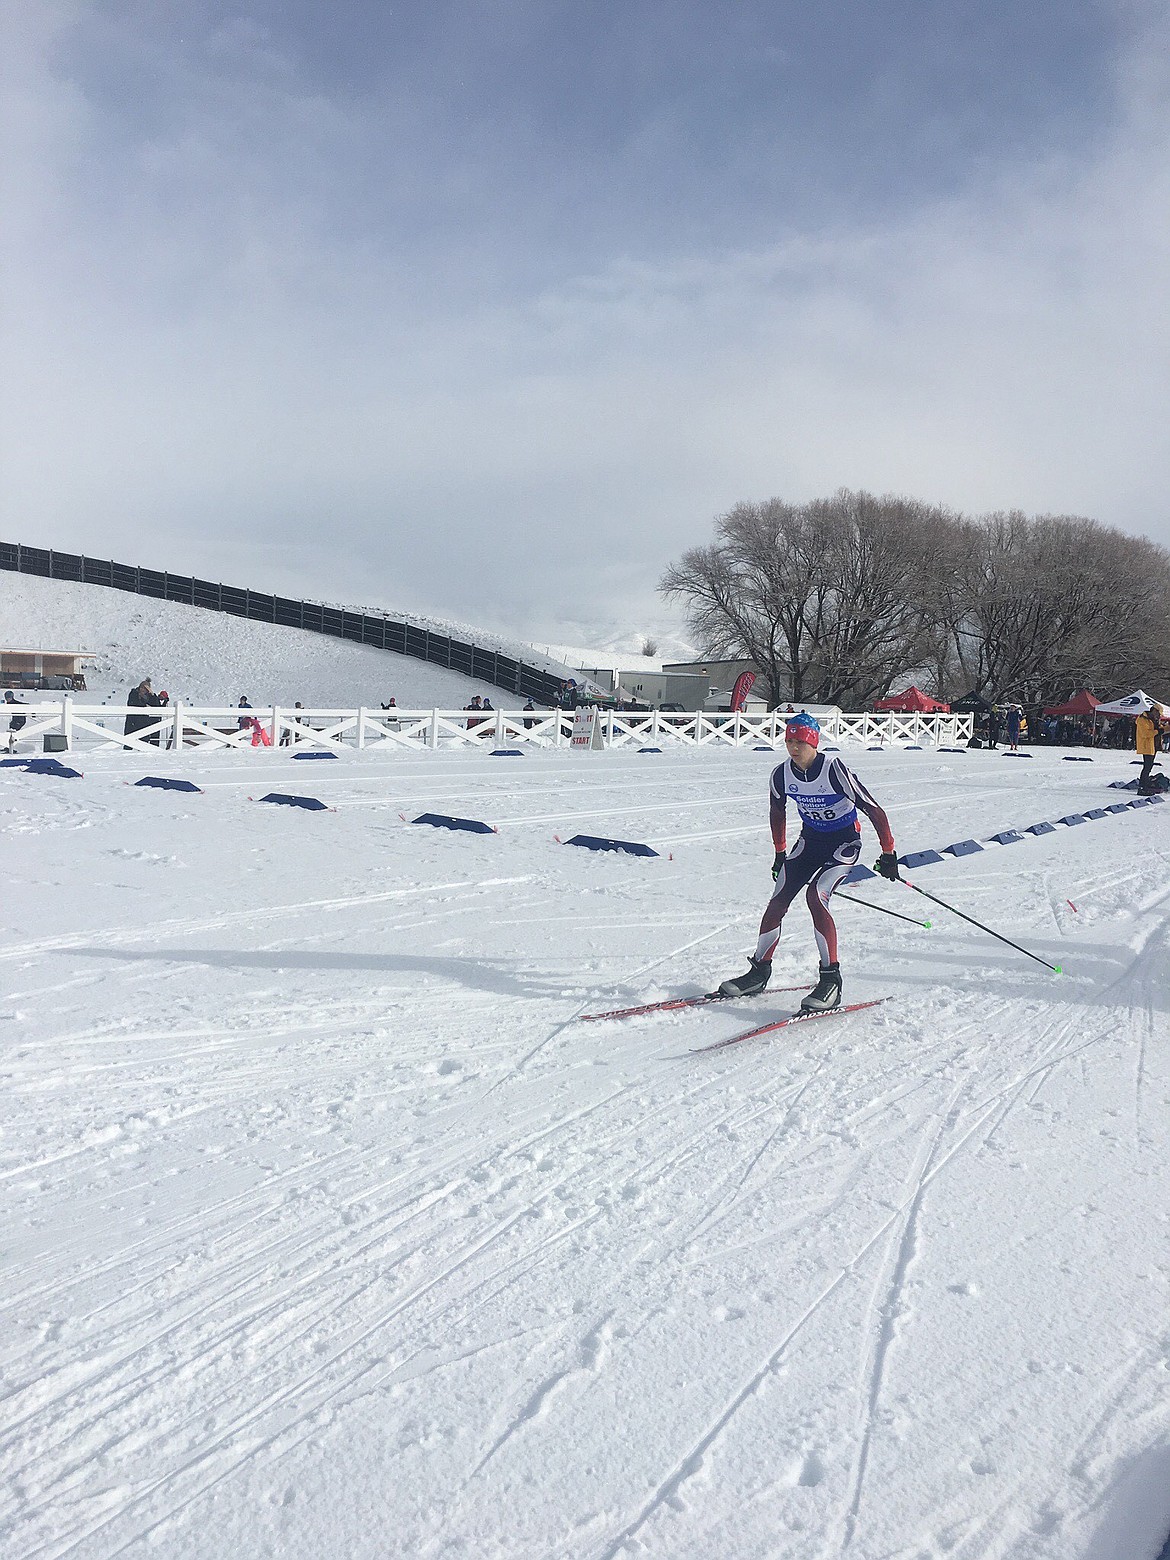 Barrett Garcia, of Glacier Nordic Club Ski Team, races in Soldier Hollow, Utah. (Courtesy photo)